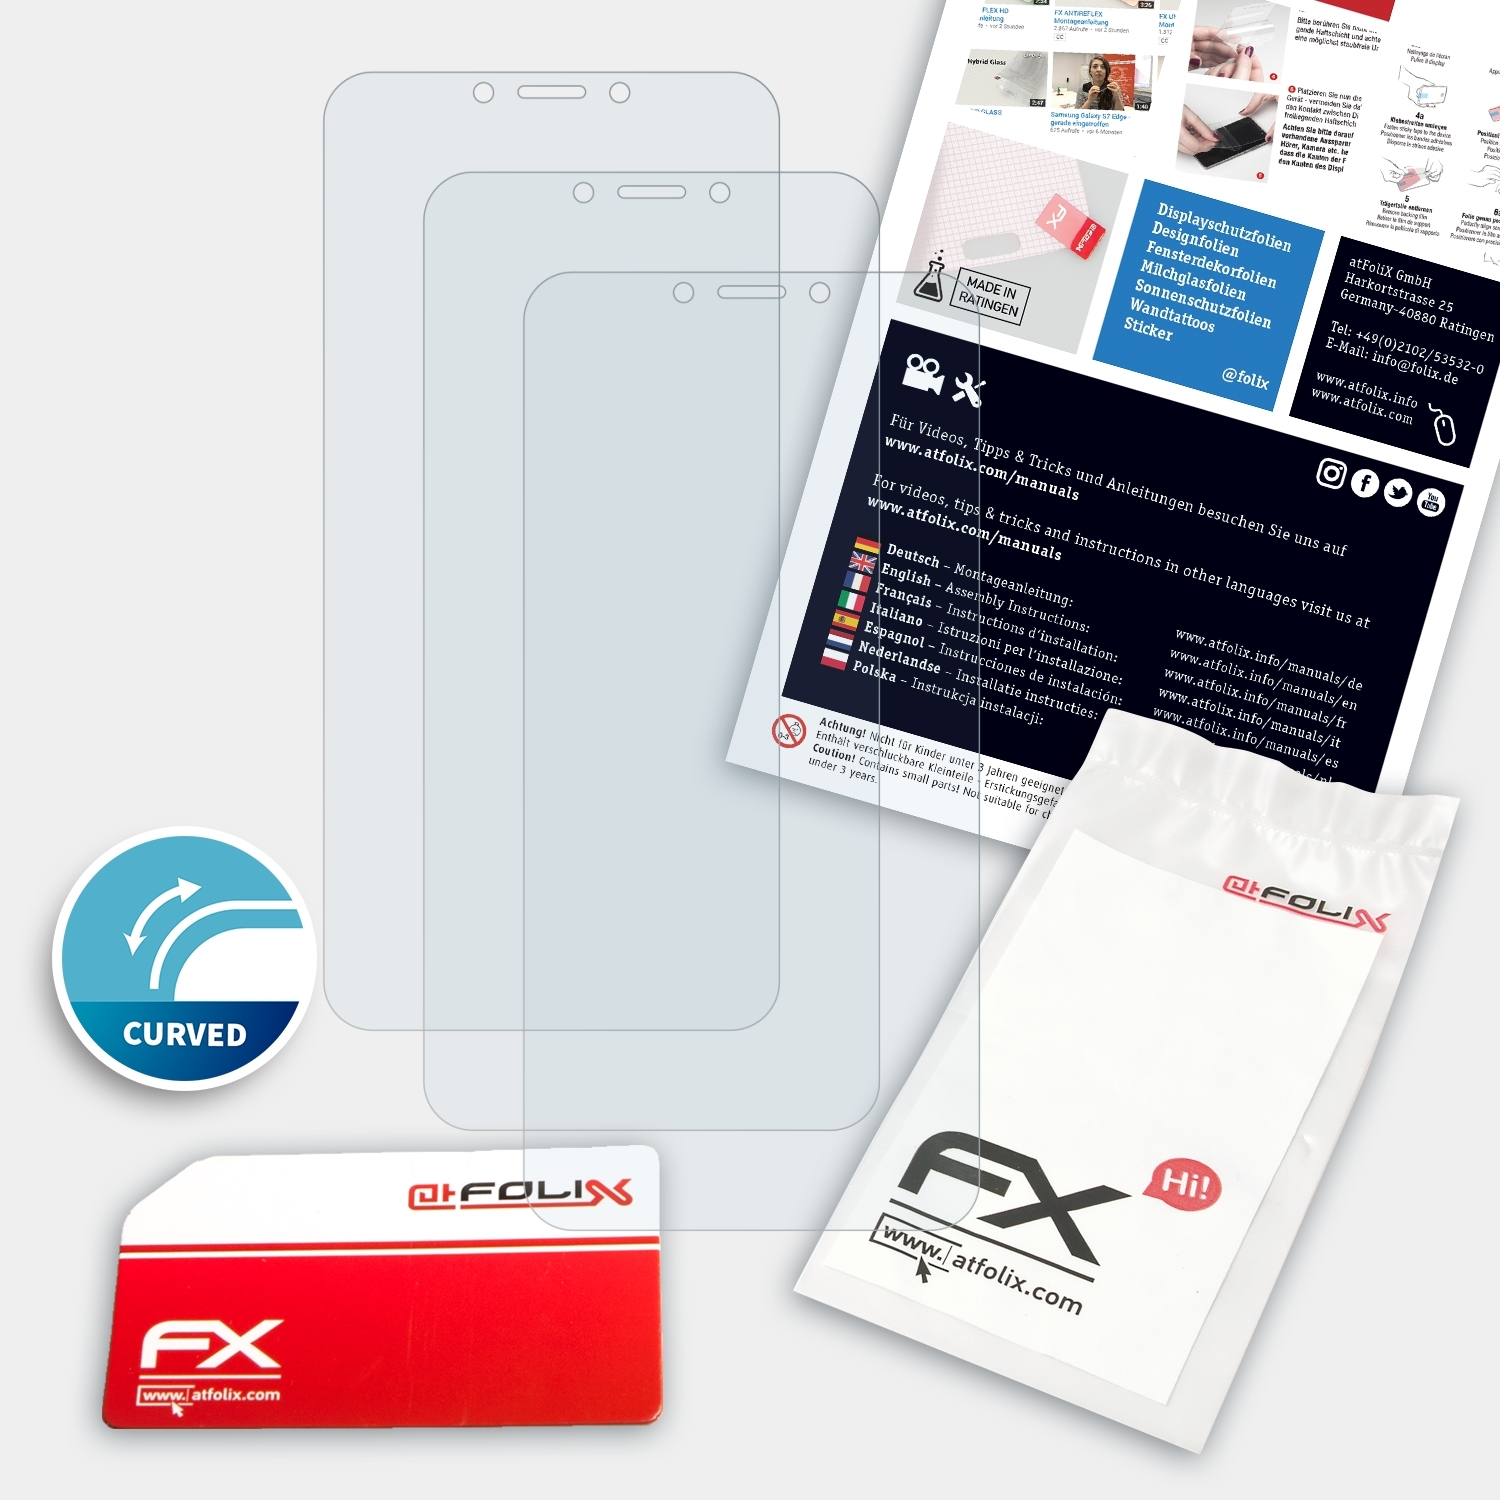 ATFOLIX 3x FX-ActiFleX Displayschutz(für 5V) Alcatel